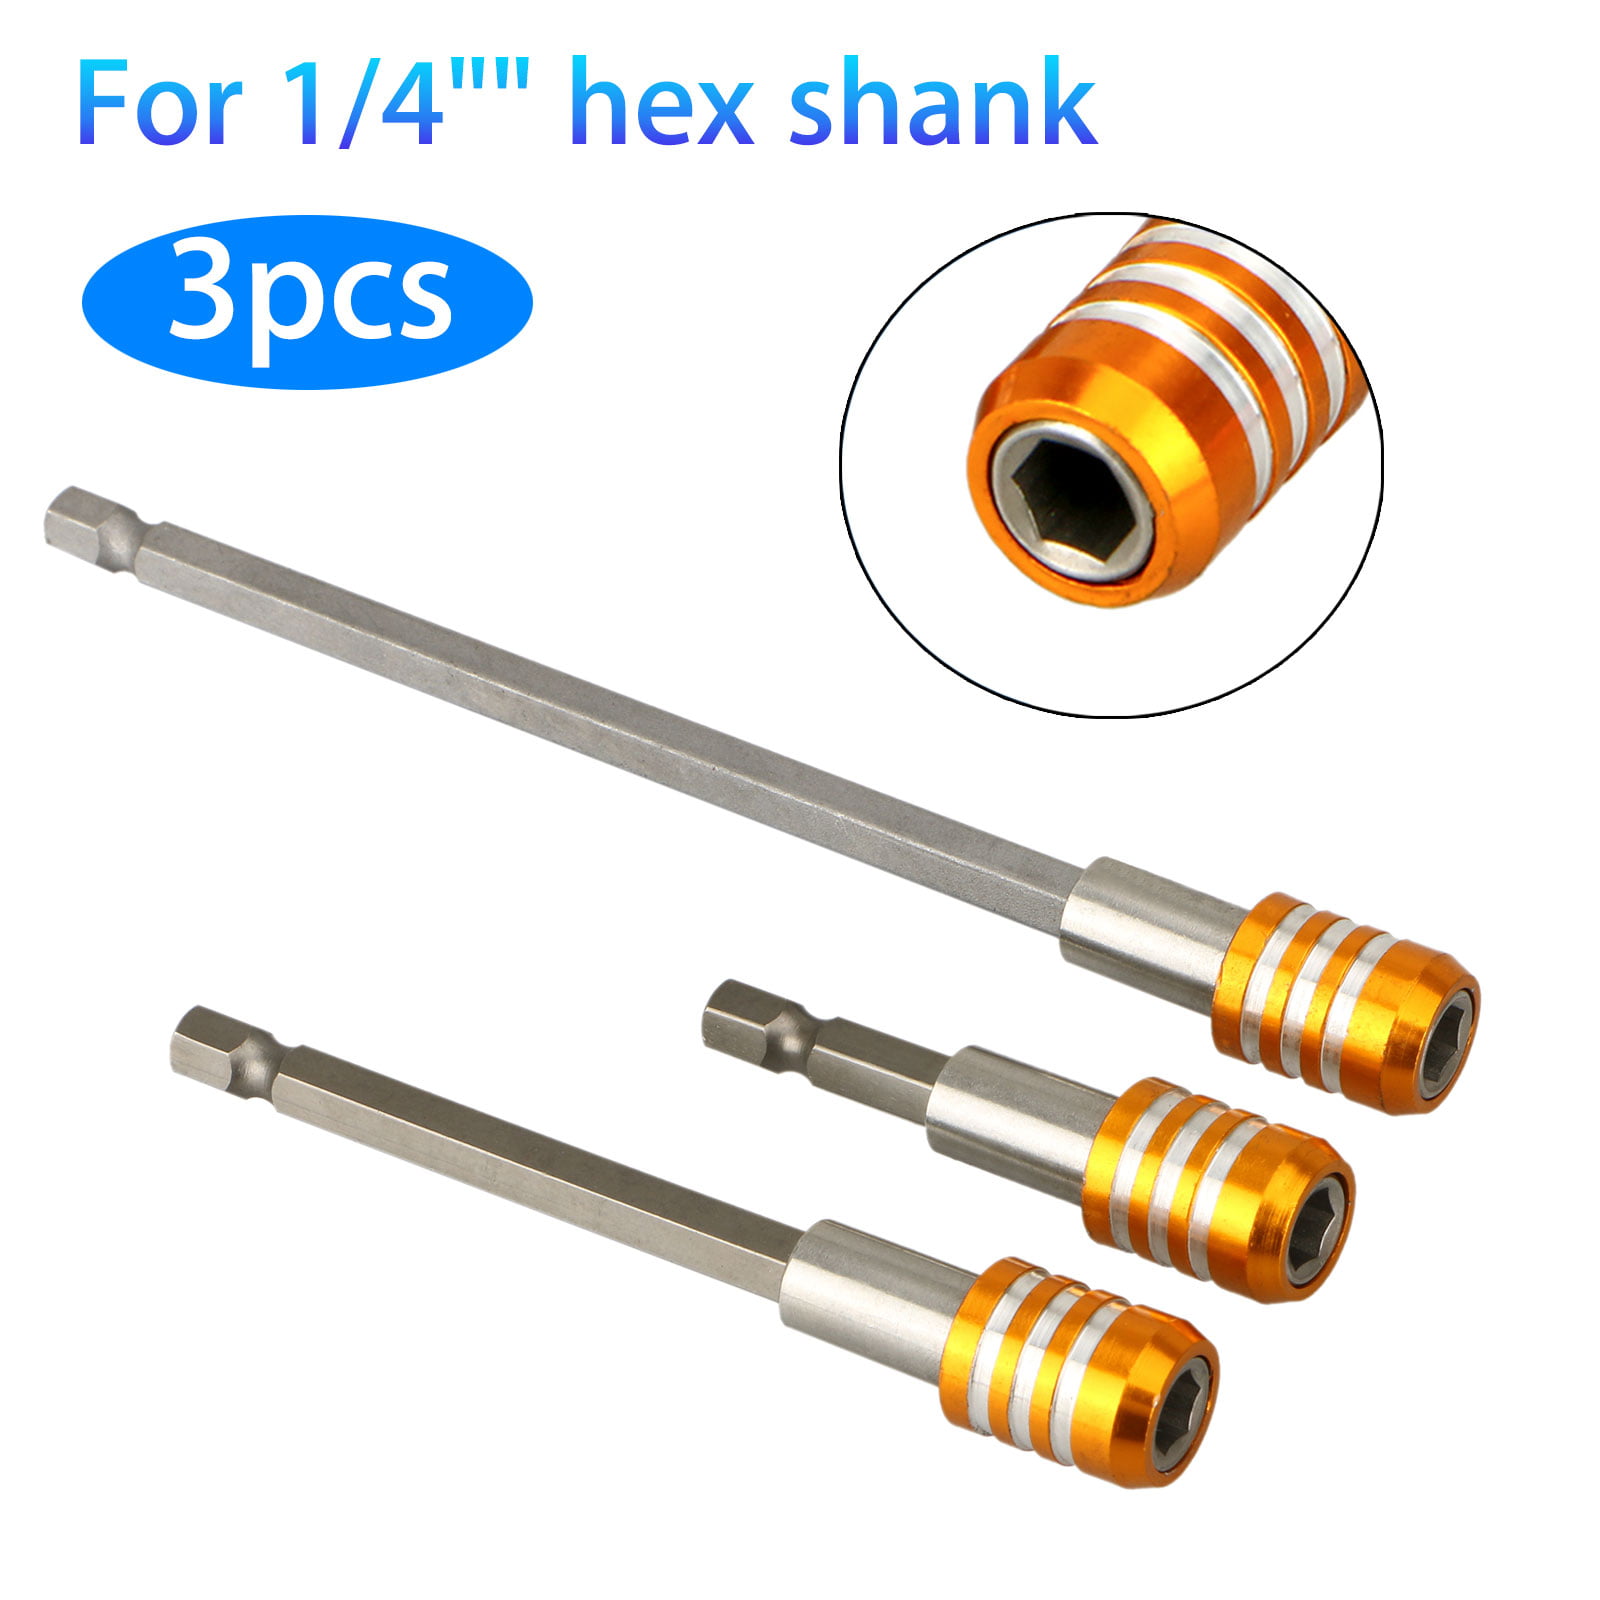 3PCS Hex Shank Magnetic Screwdriver Quick Release Extension Holder Bit